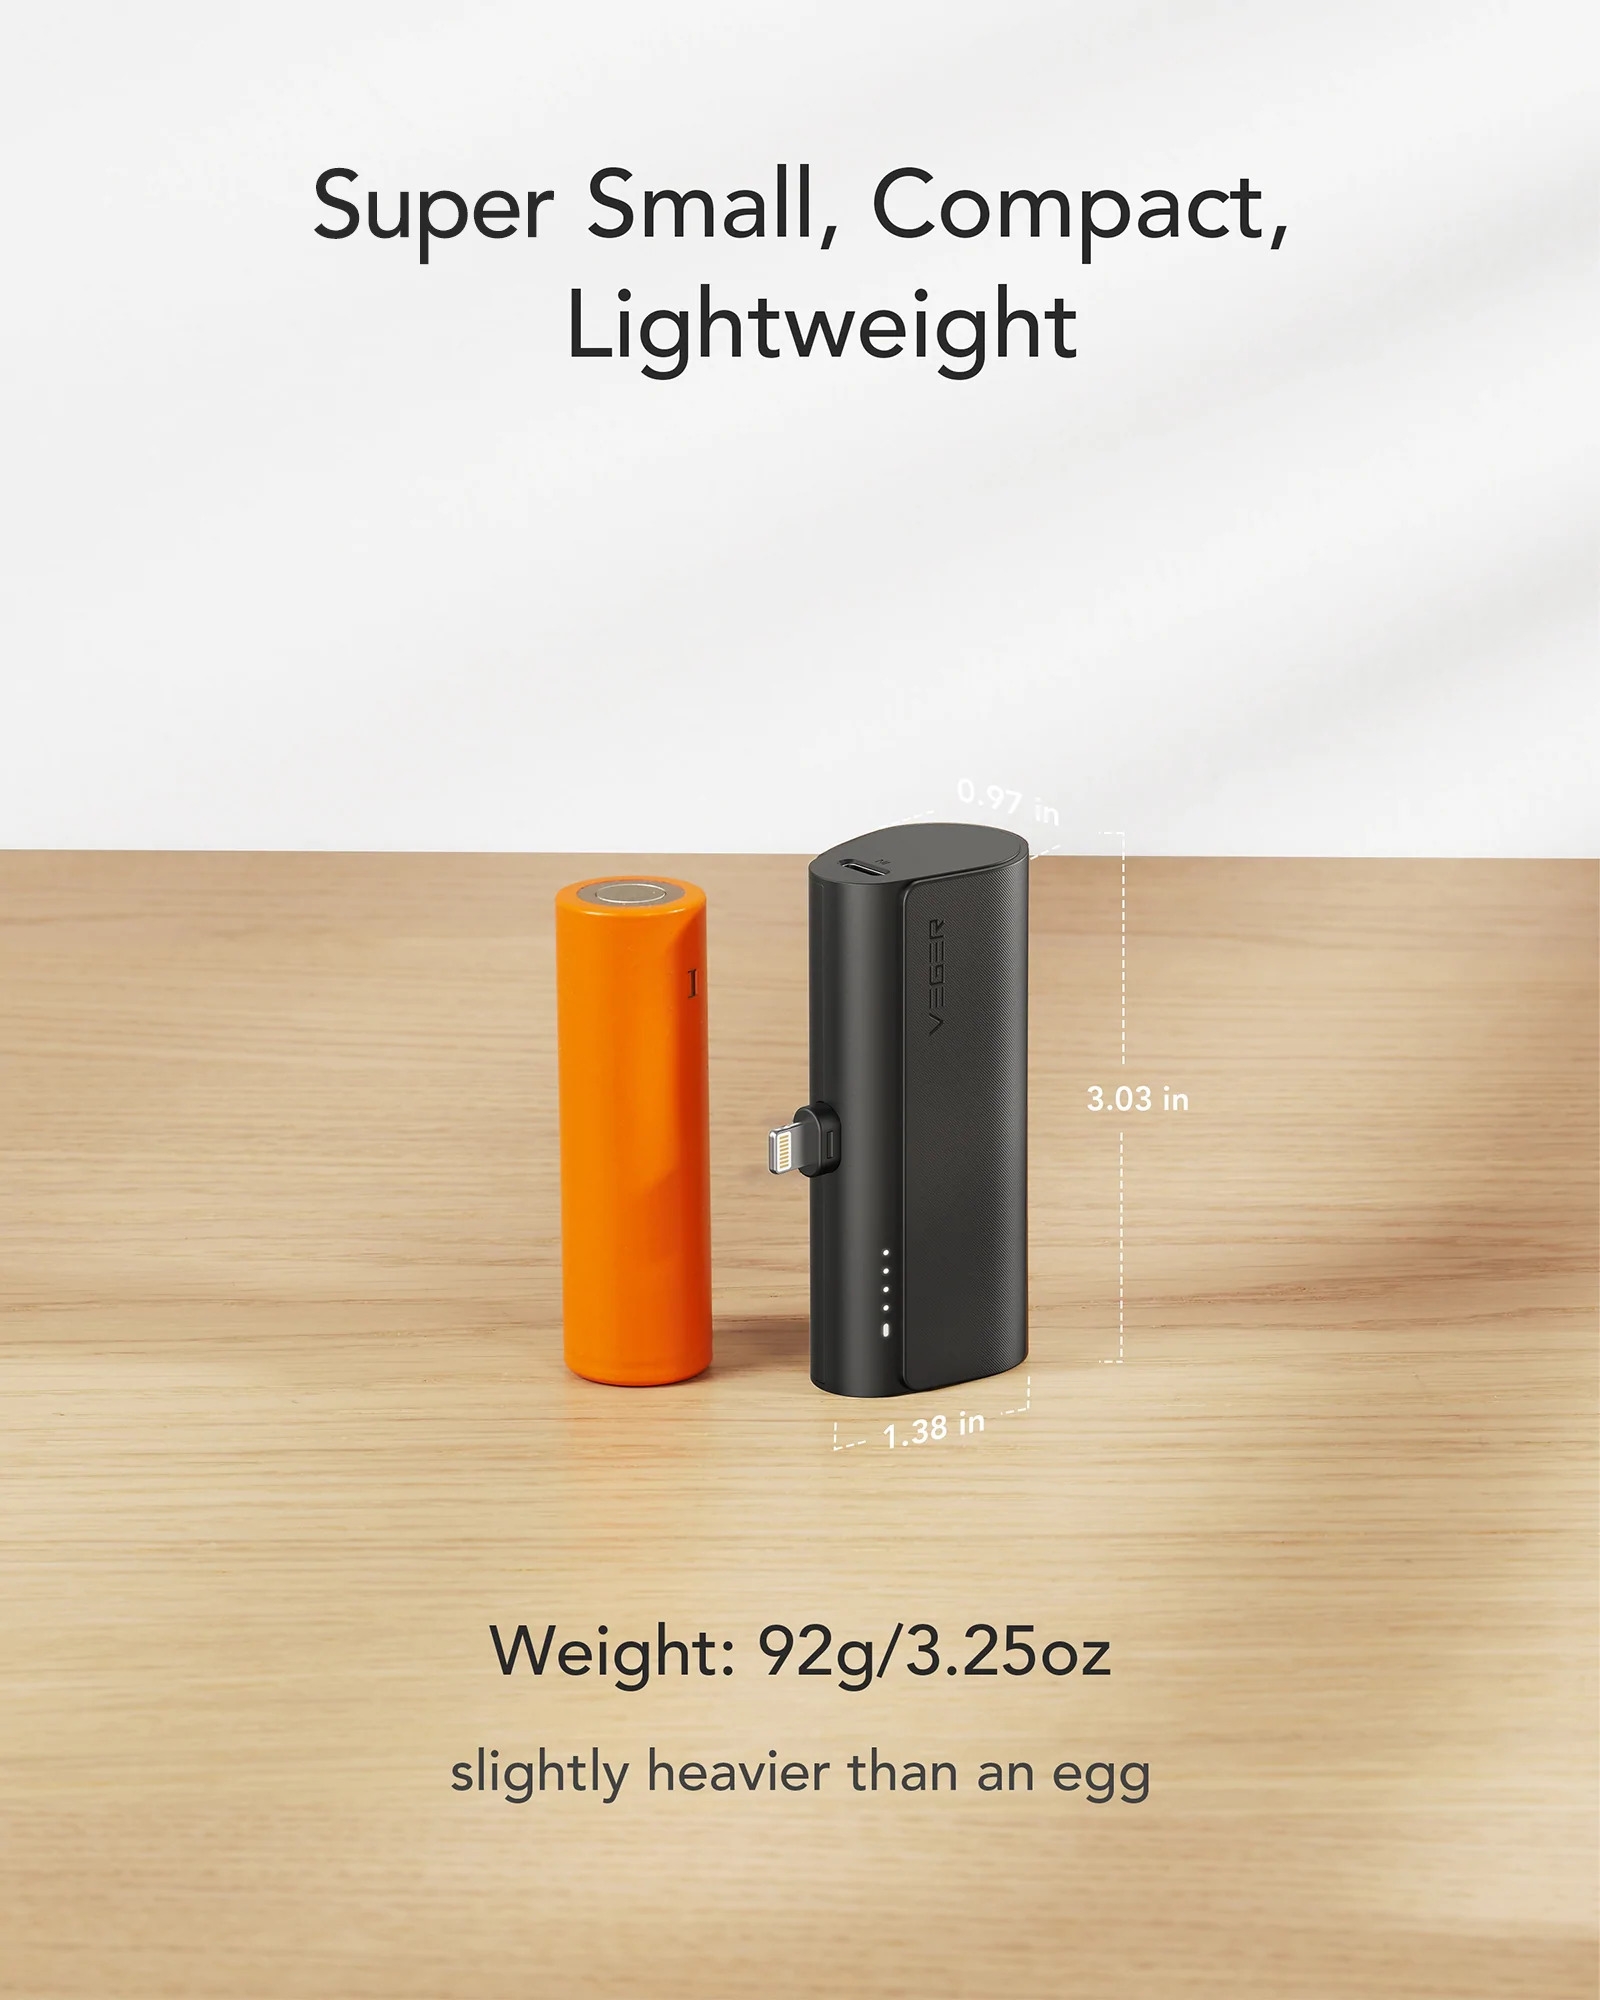 باور بانك محمول للآيفون VEGER Mini Portable Charger for iPhone سعة 5000 مللي أمبير